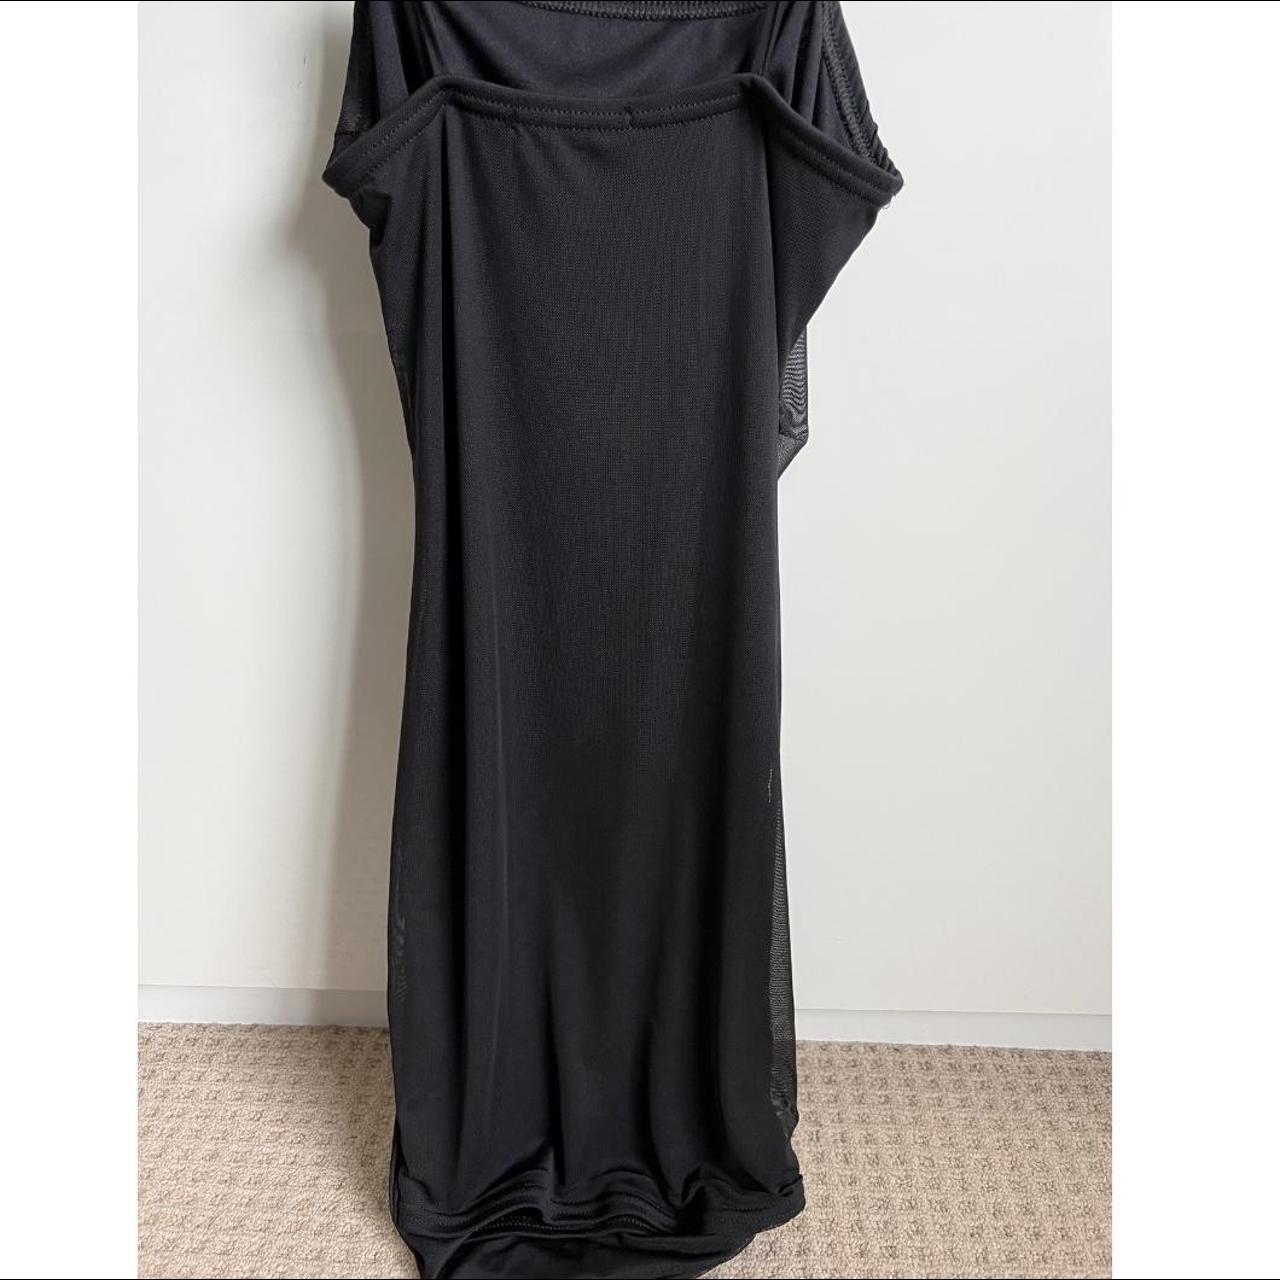 Femme luxe black mesh dress - size 6 #mesh... - Depop